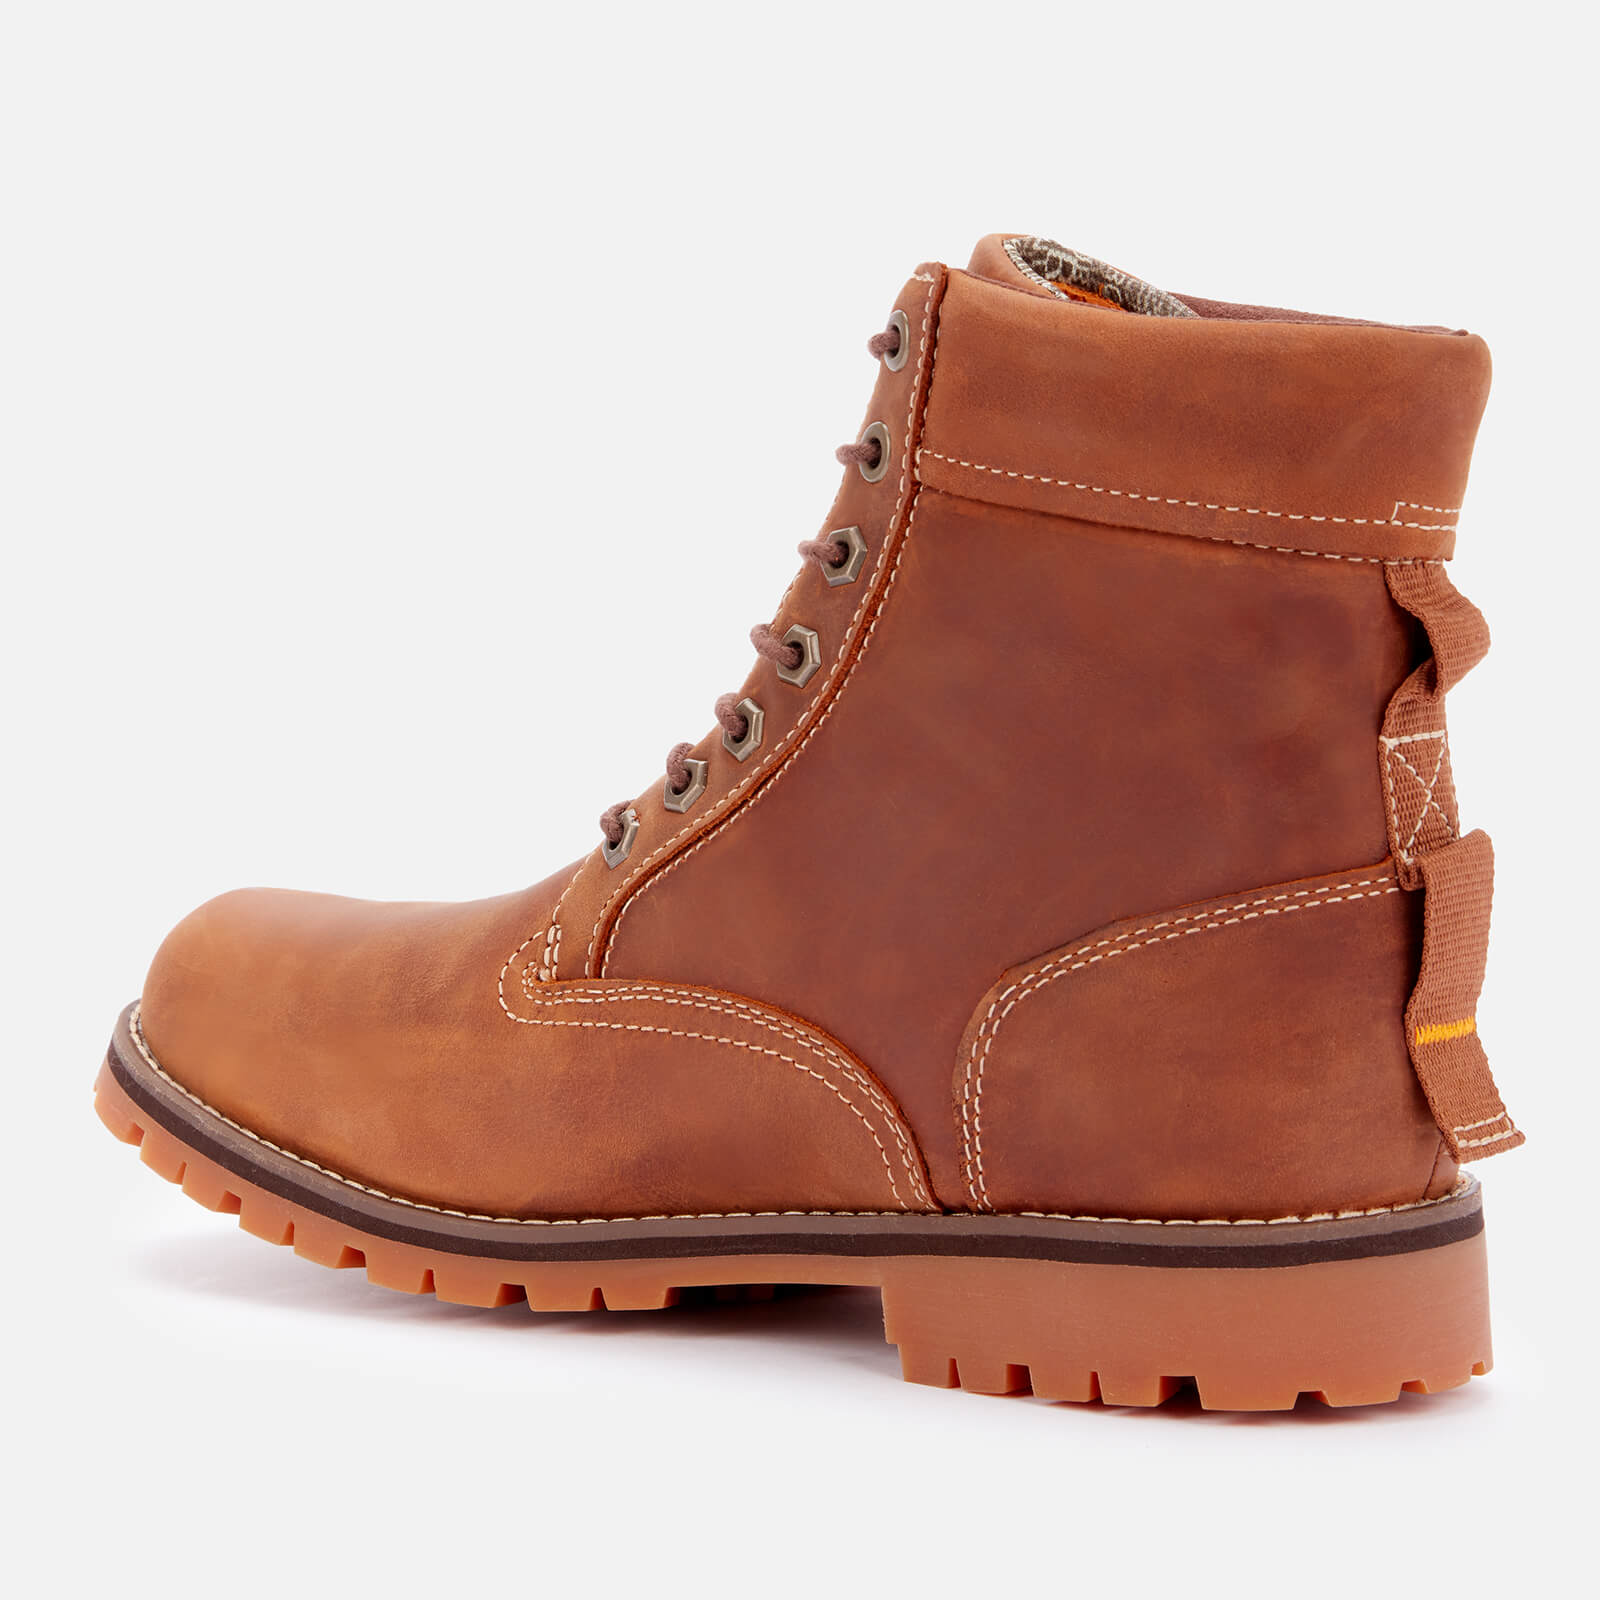 Timberland Men's Rugged Waterproof Leather Ii 6 Inch Boots - Rust - Uk 7